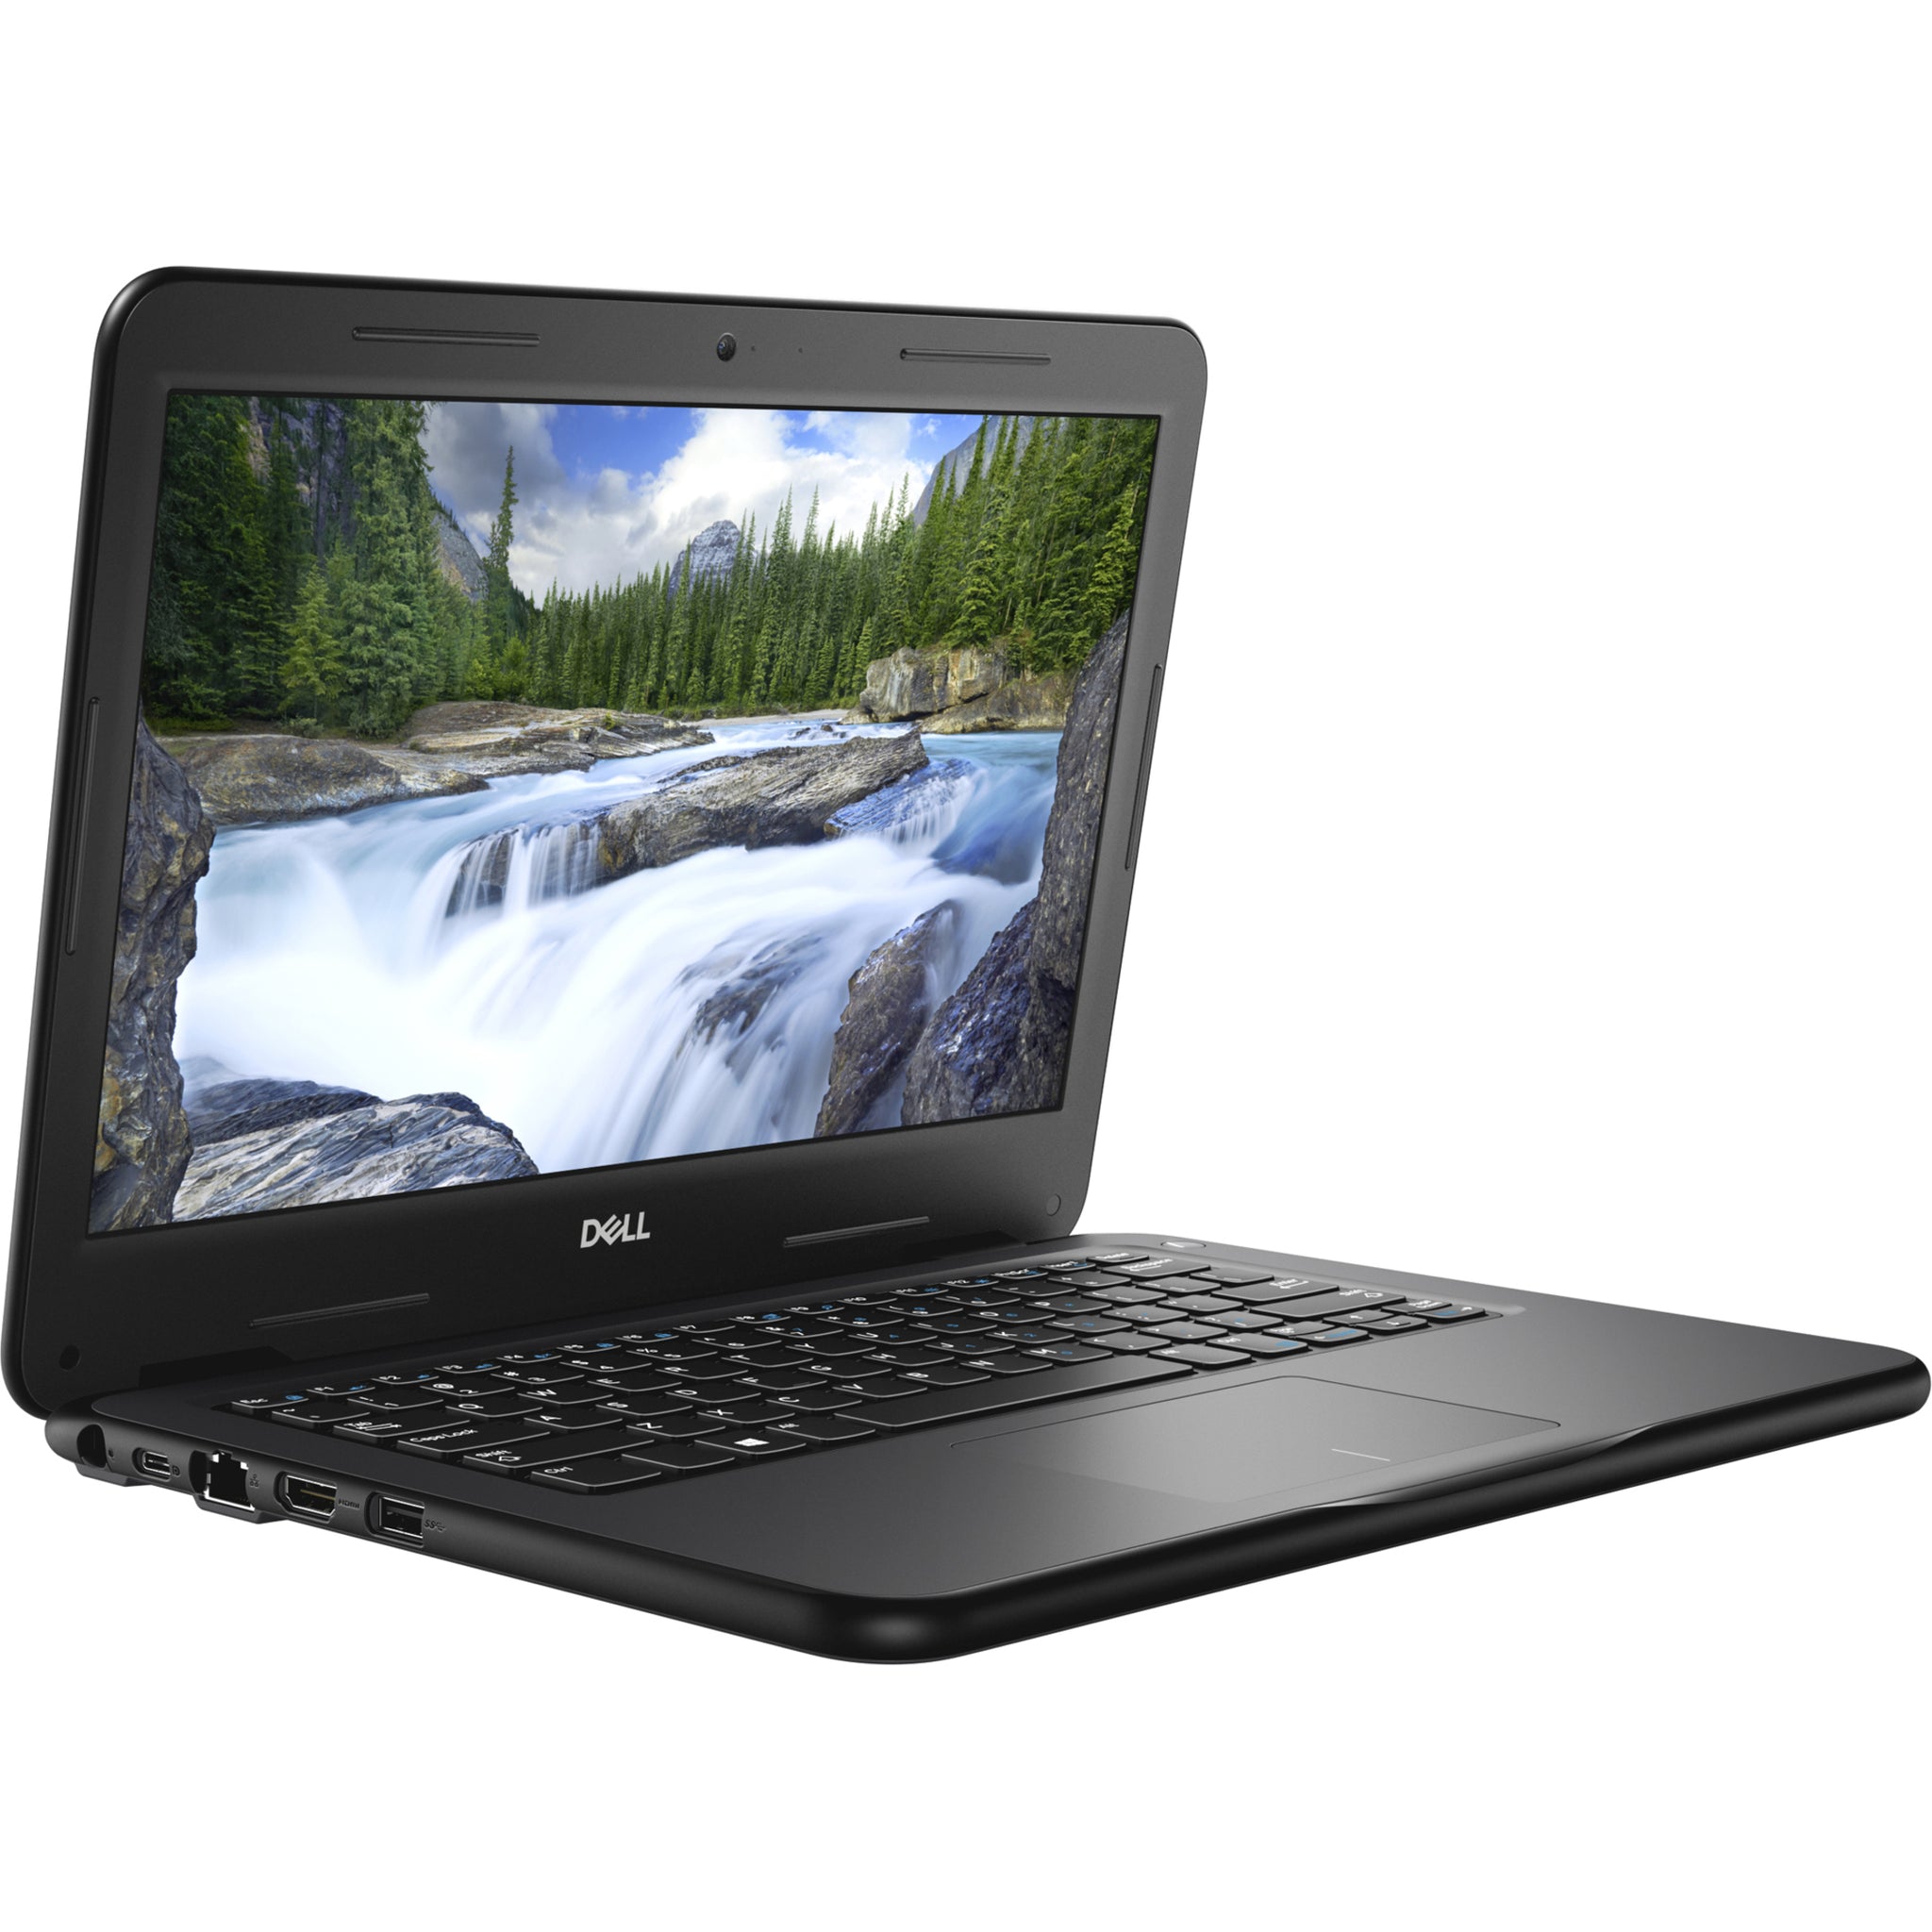 Dell Latitude 13.3" Laptop - Intel Celeron 4205U - 4GB RAM - 64GB SSD, Windows 10(Refurbished)